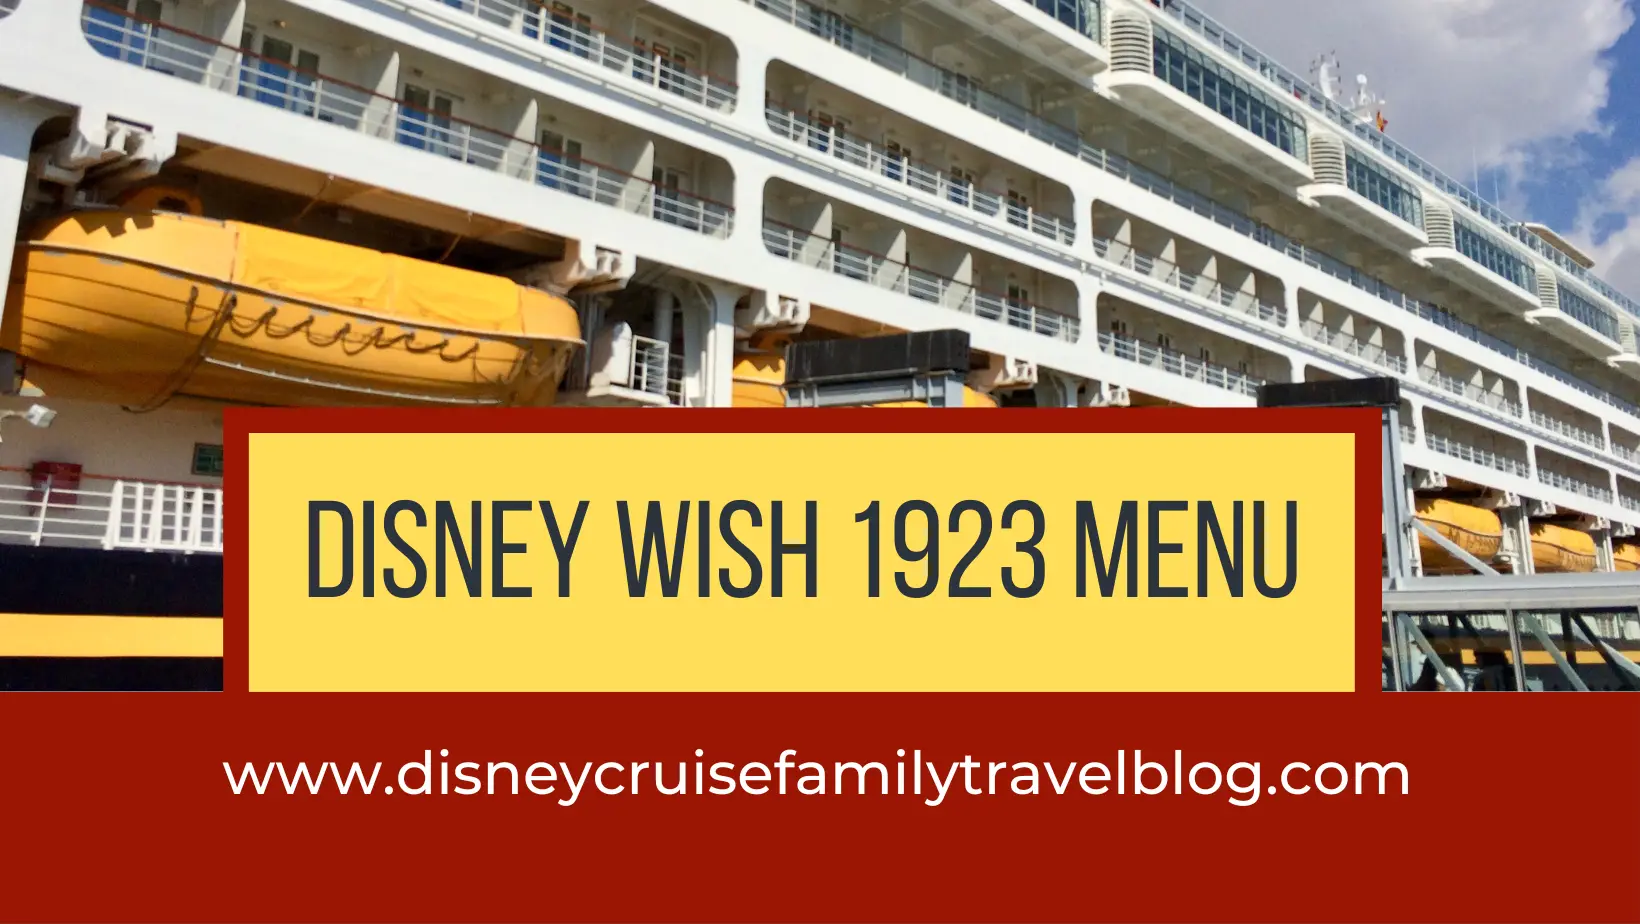 Disney Wish 1923 Menu The Disney Cruise Family Travel Blog